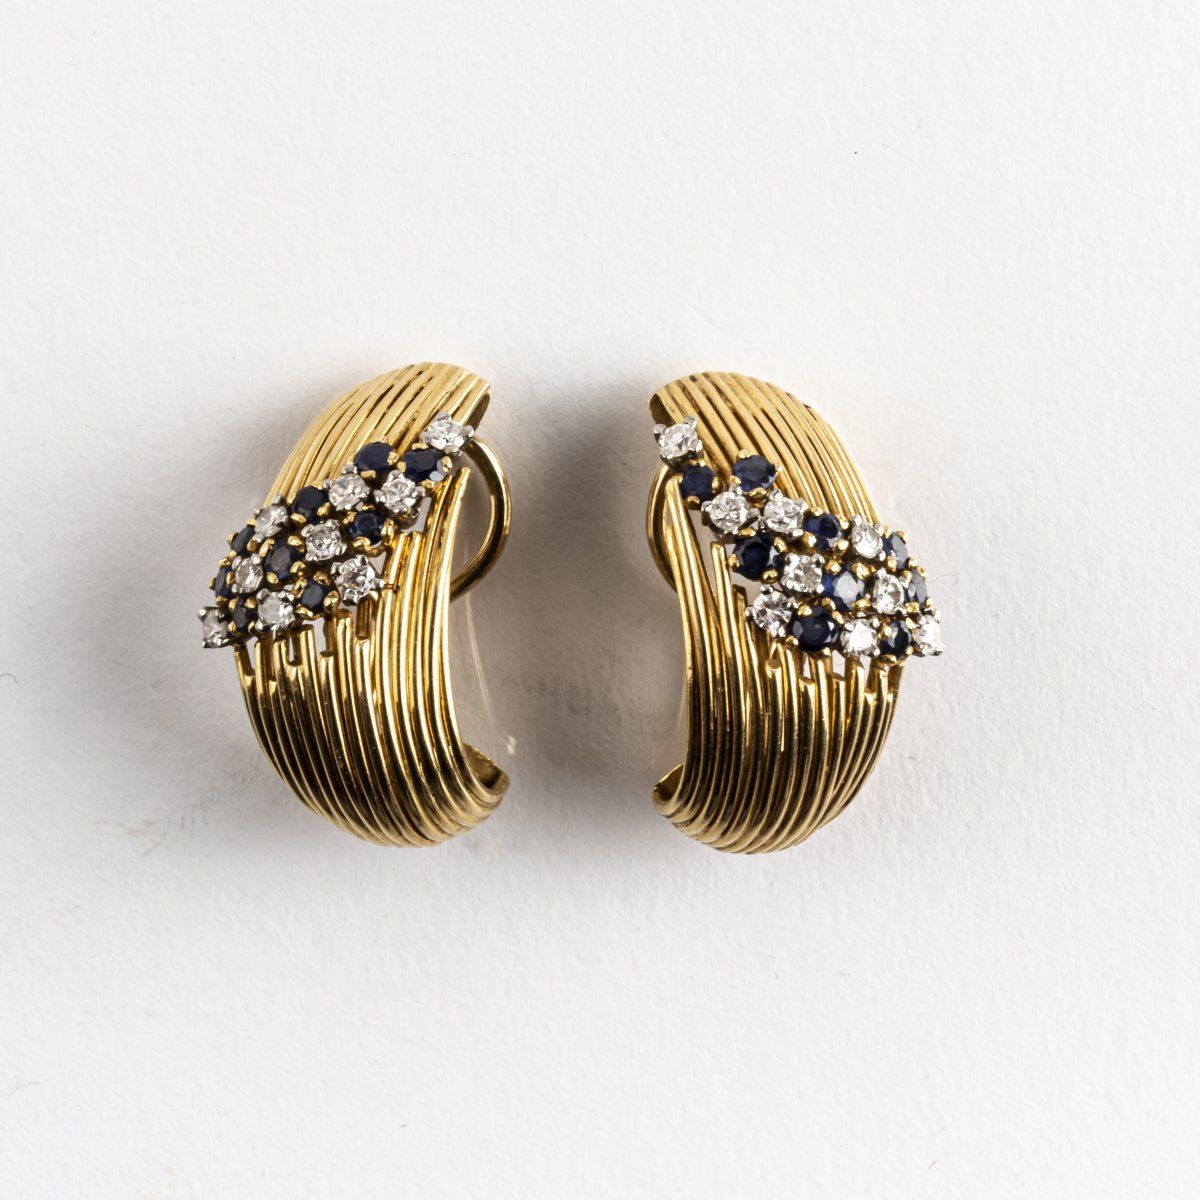 Null 美国，一对夹式耳环，1970年代，黄金和白金，蓝宝石，钻石。每个9.27克。2.9 x 1.6厘米。

没有签名。